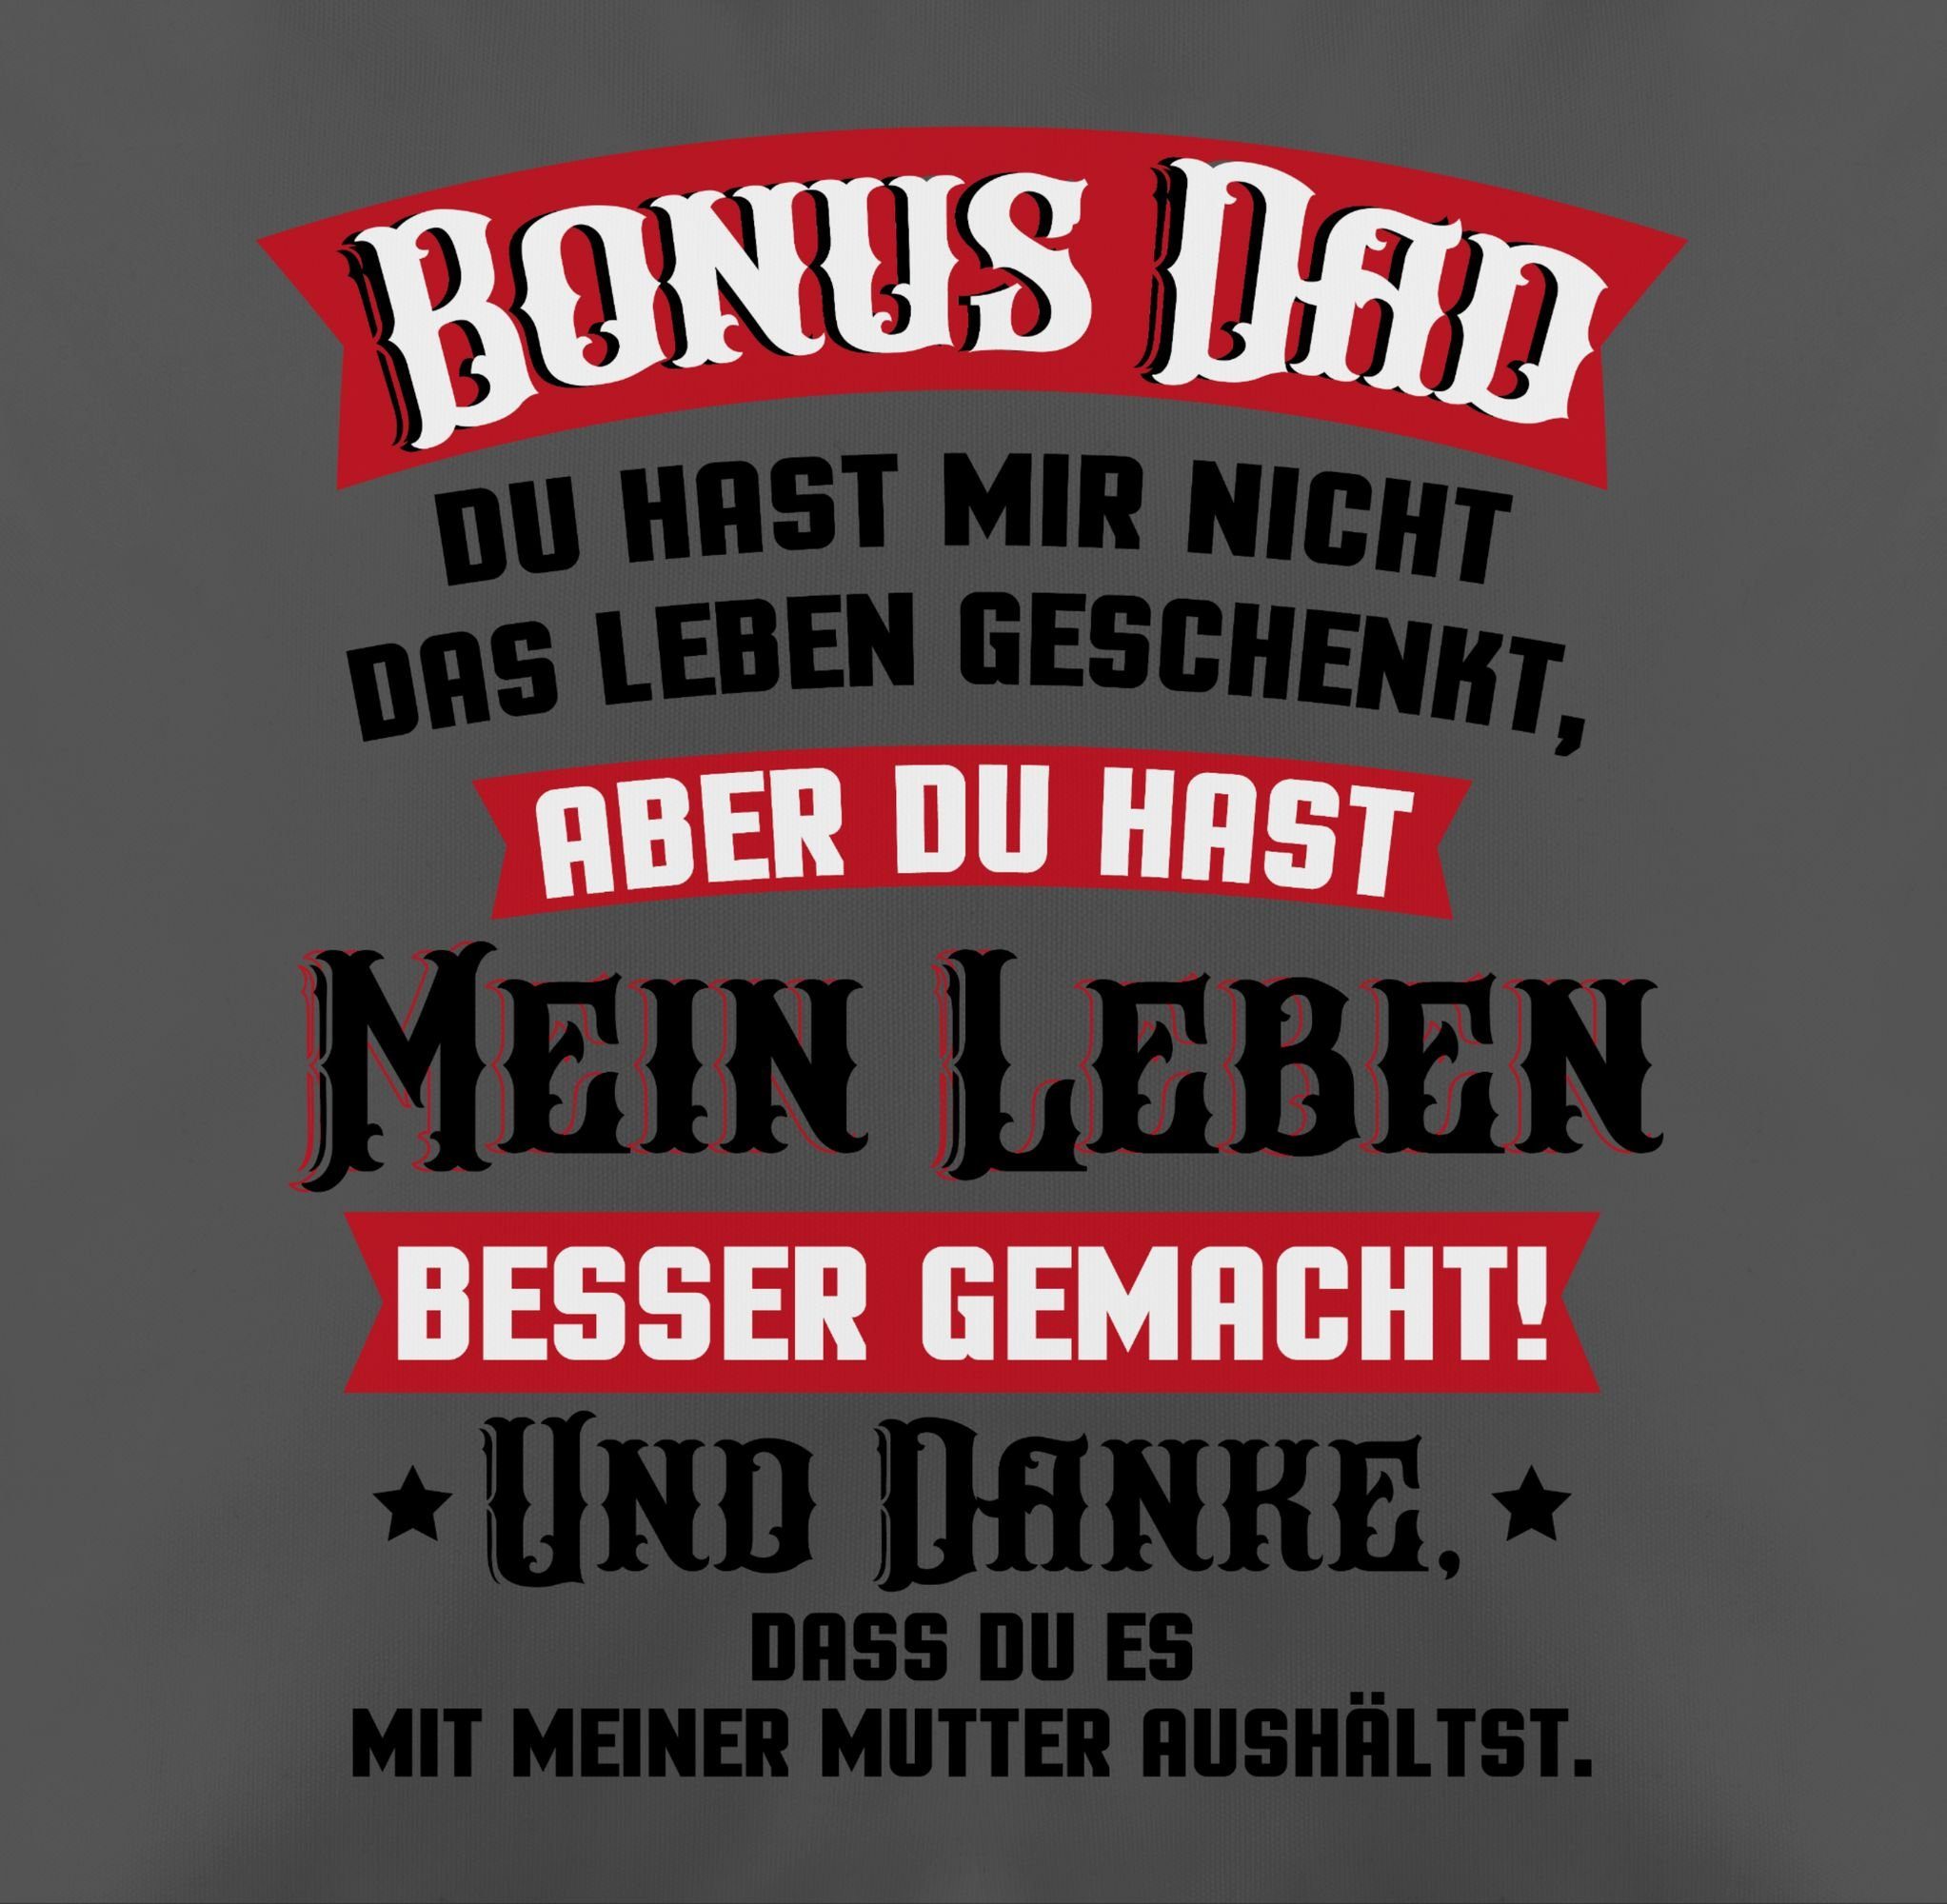 1 Bonus Dekokissen Dad Grau Kissen - Shirtracer rot/schwarz, Vatertagsgeschenk